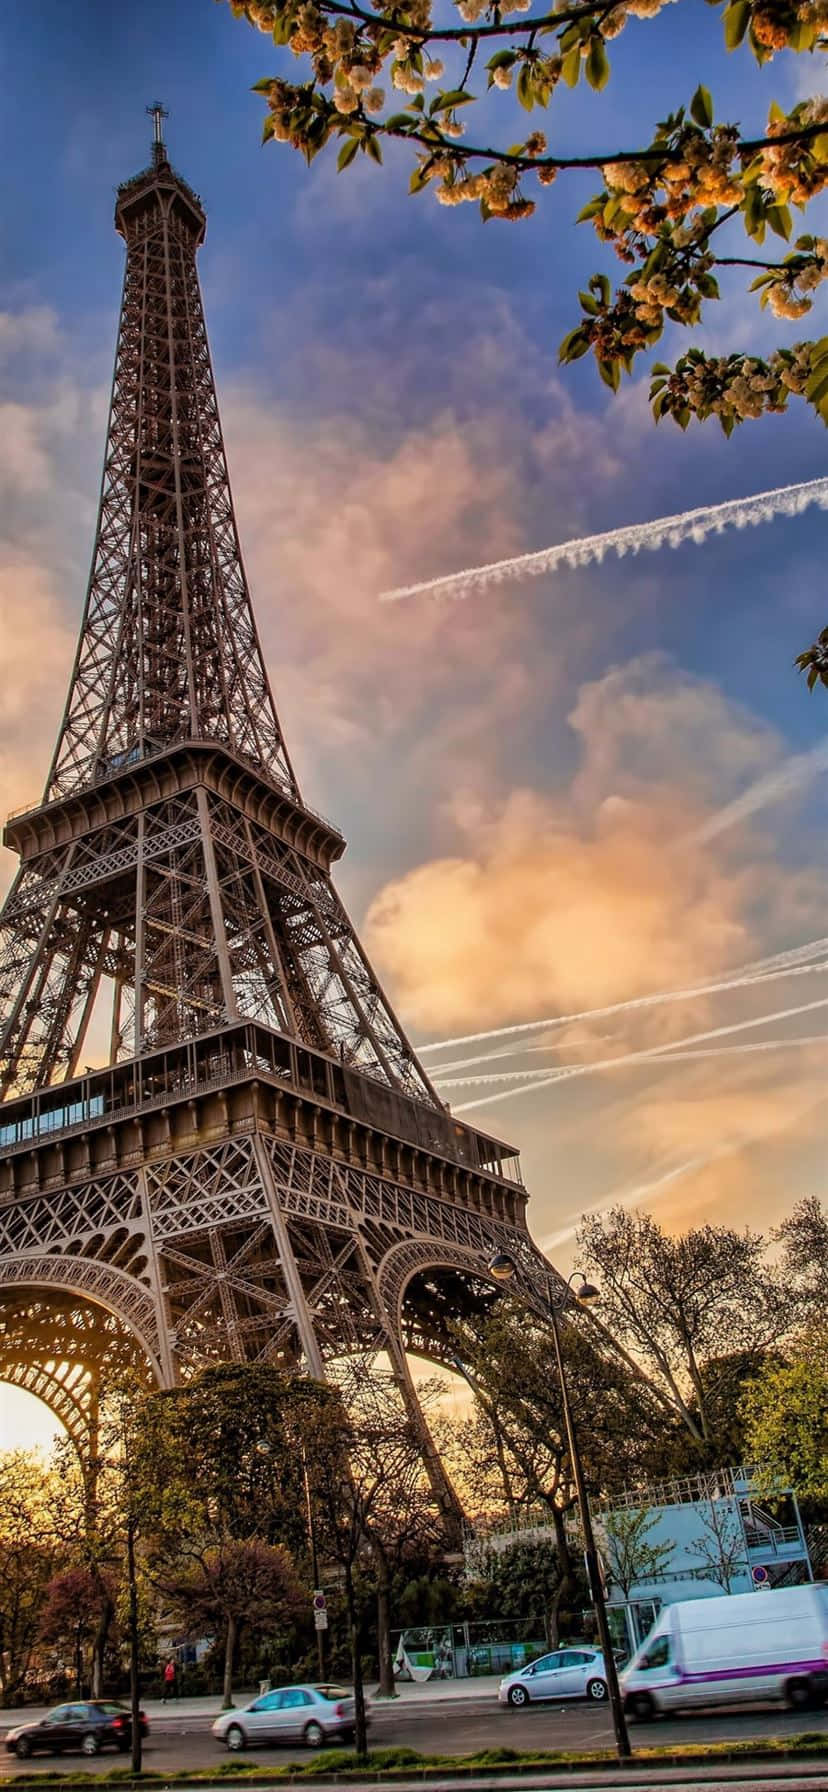 The golden hour strikes in Paris